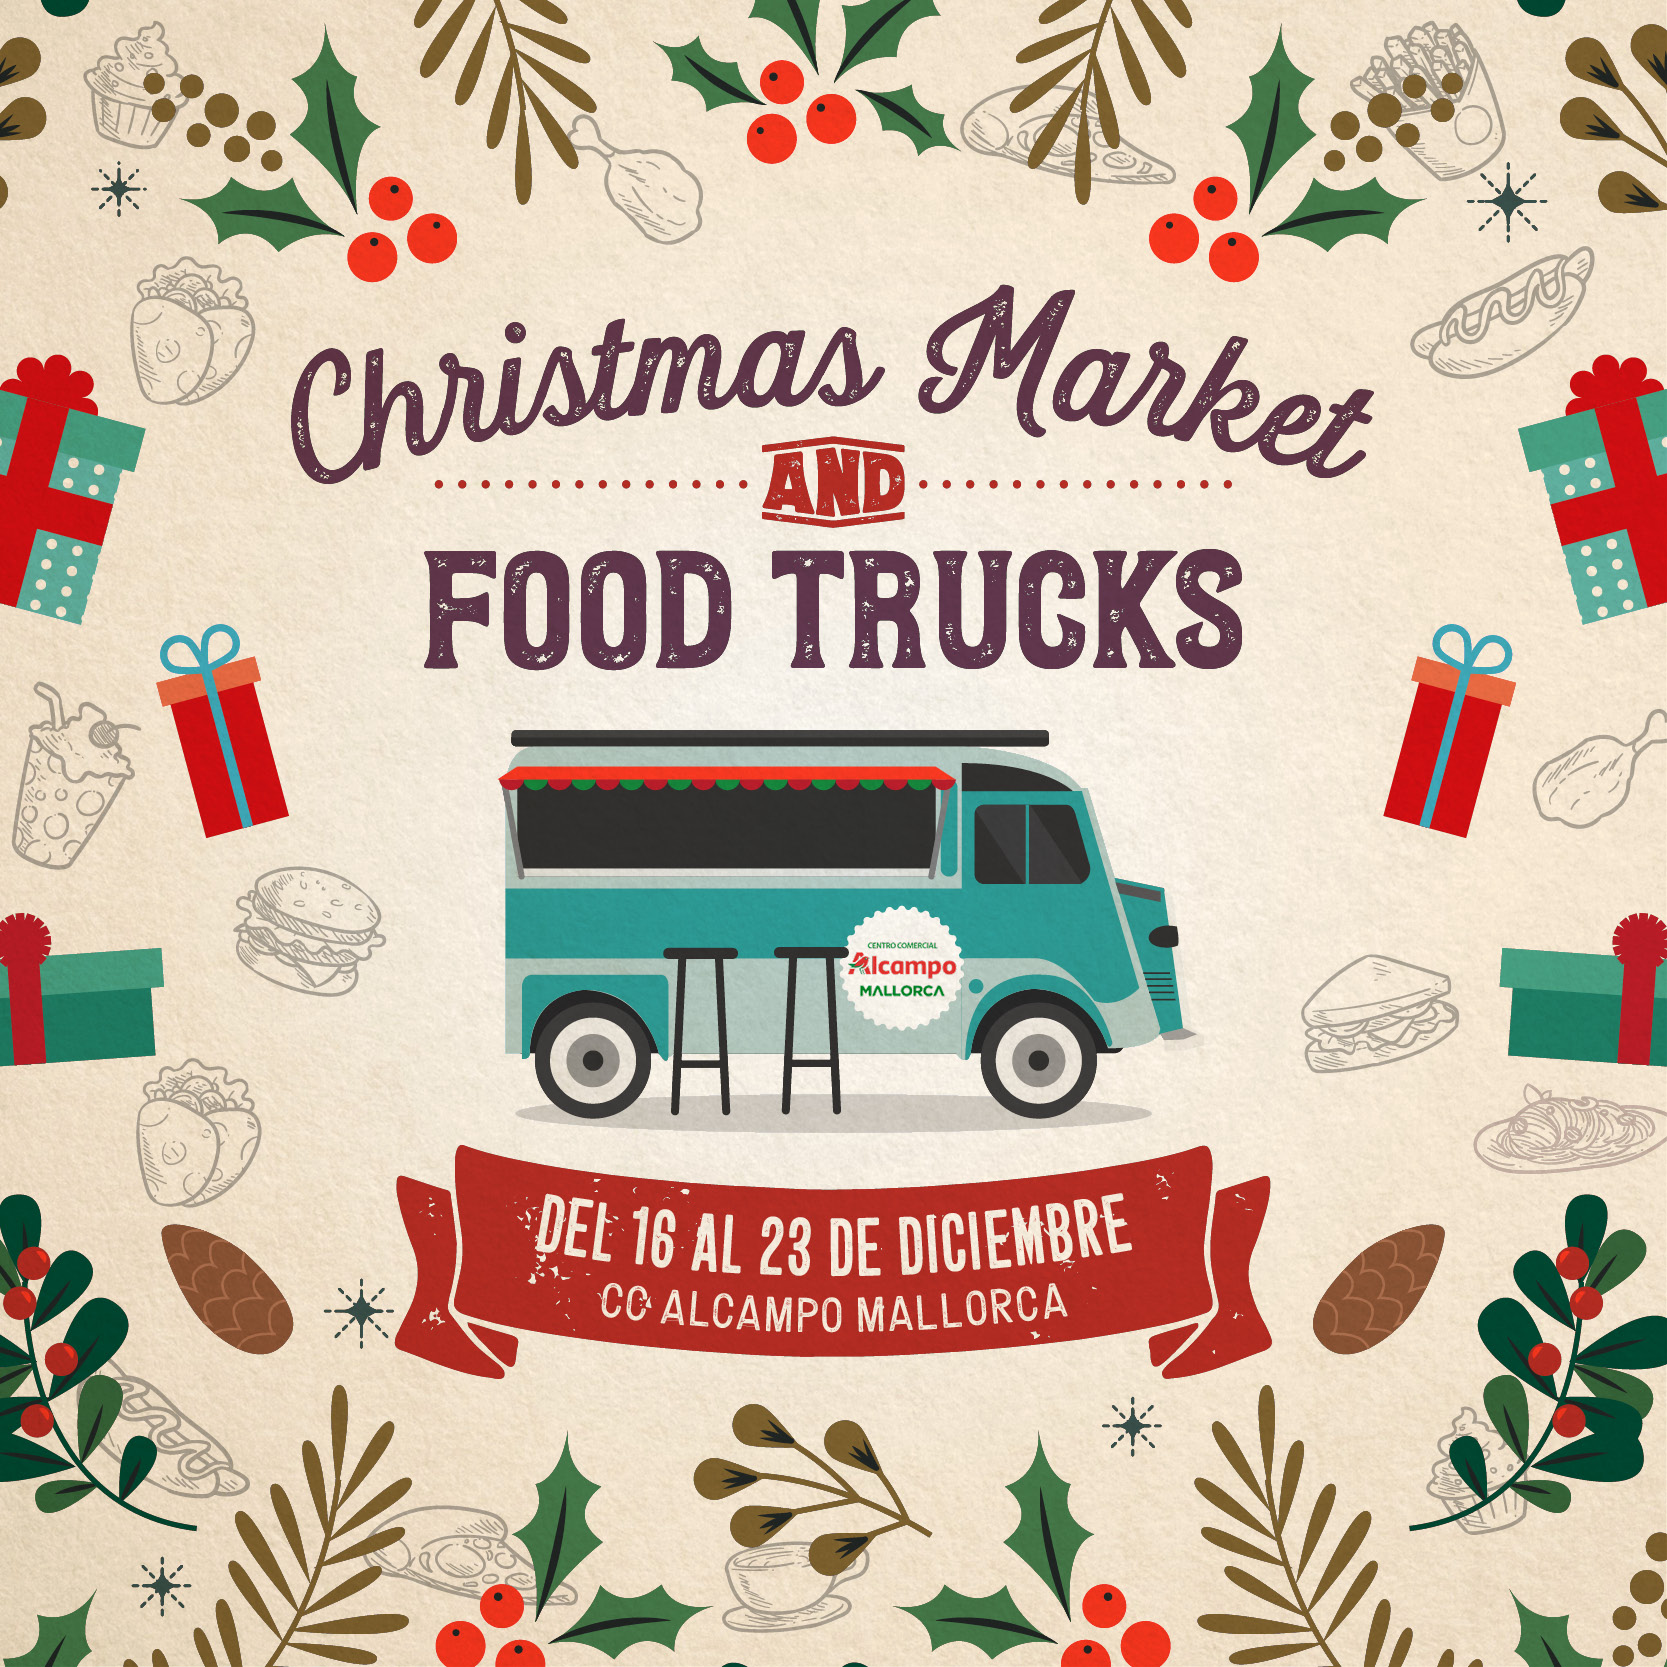 Christmas Market and Food Trucks